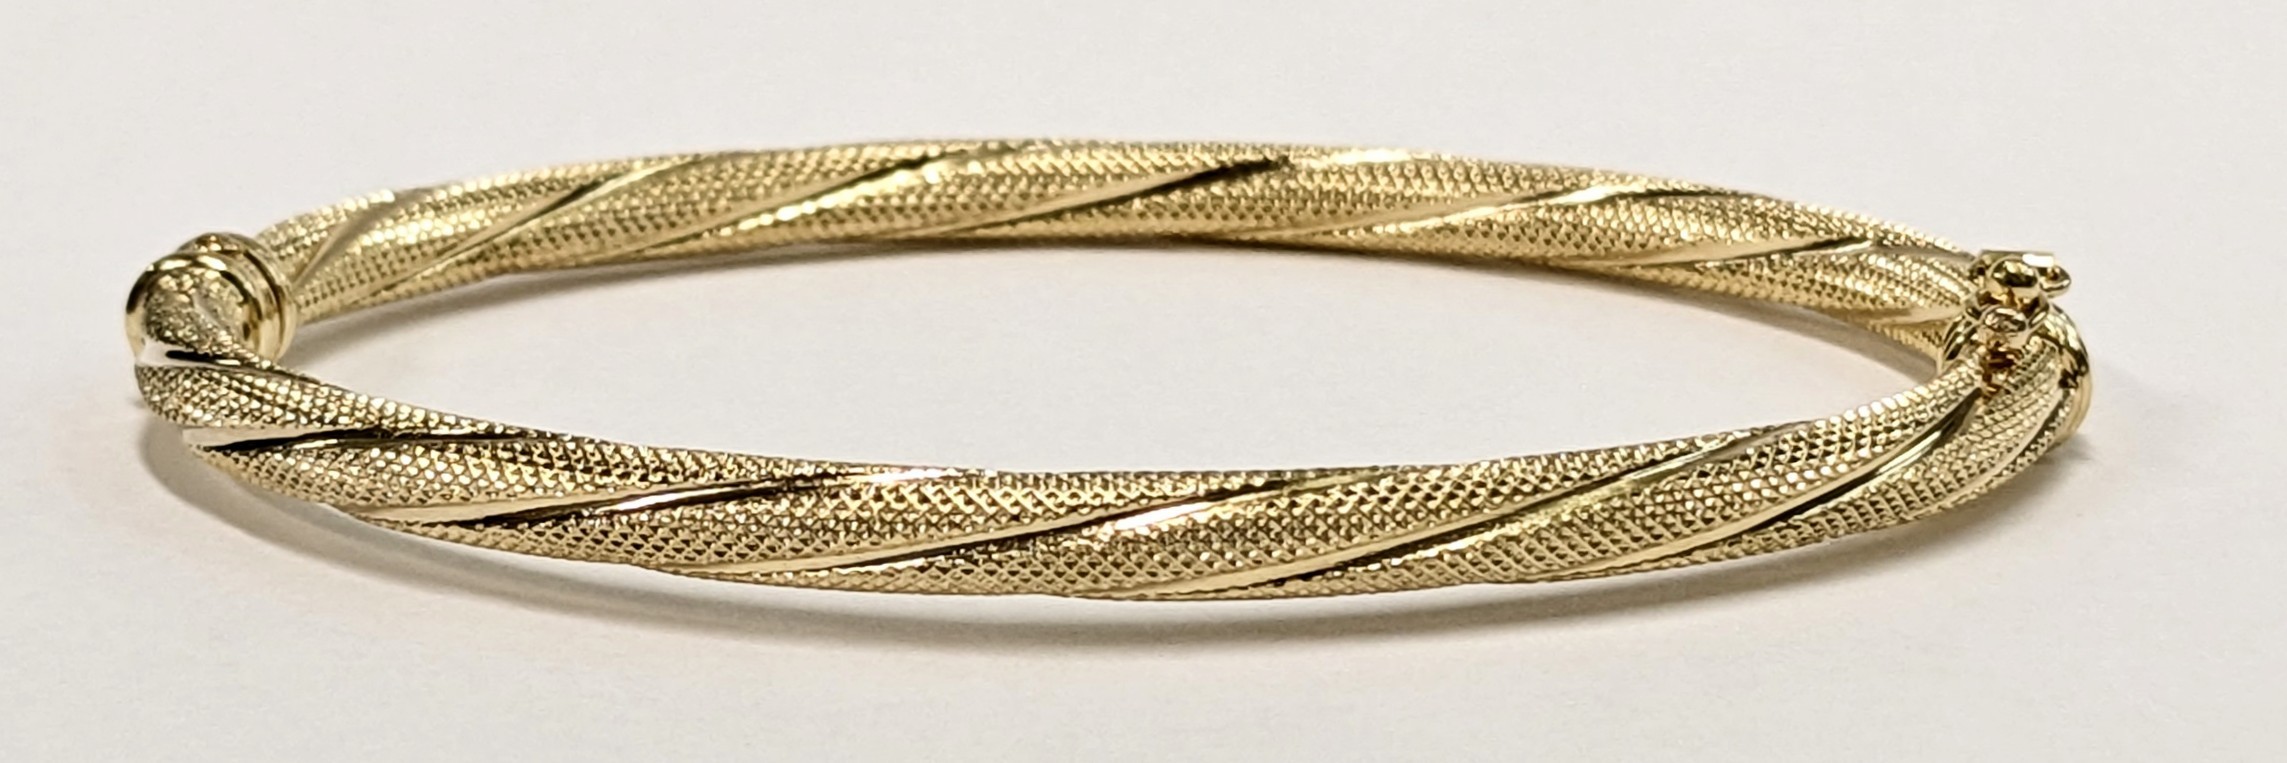 14 Karat Yellow Gold 4mm Bangle Bracelet - Sz: 7-Inch